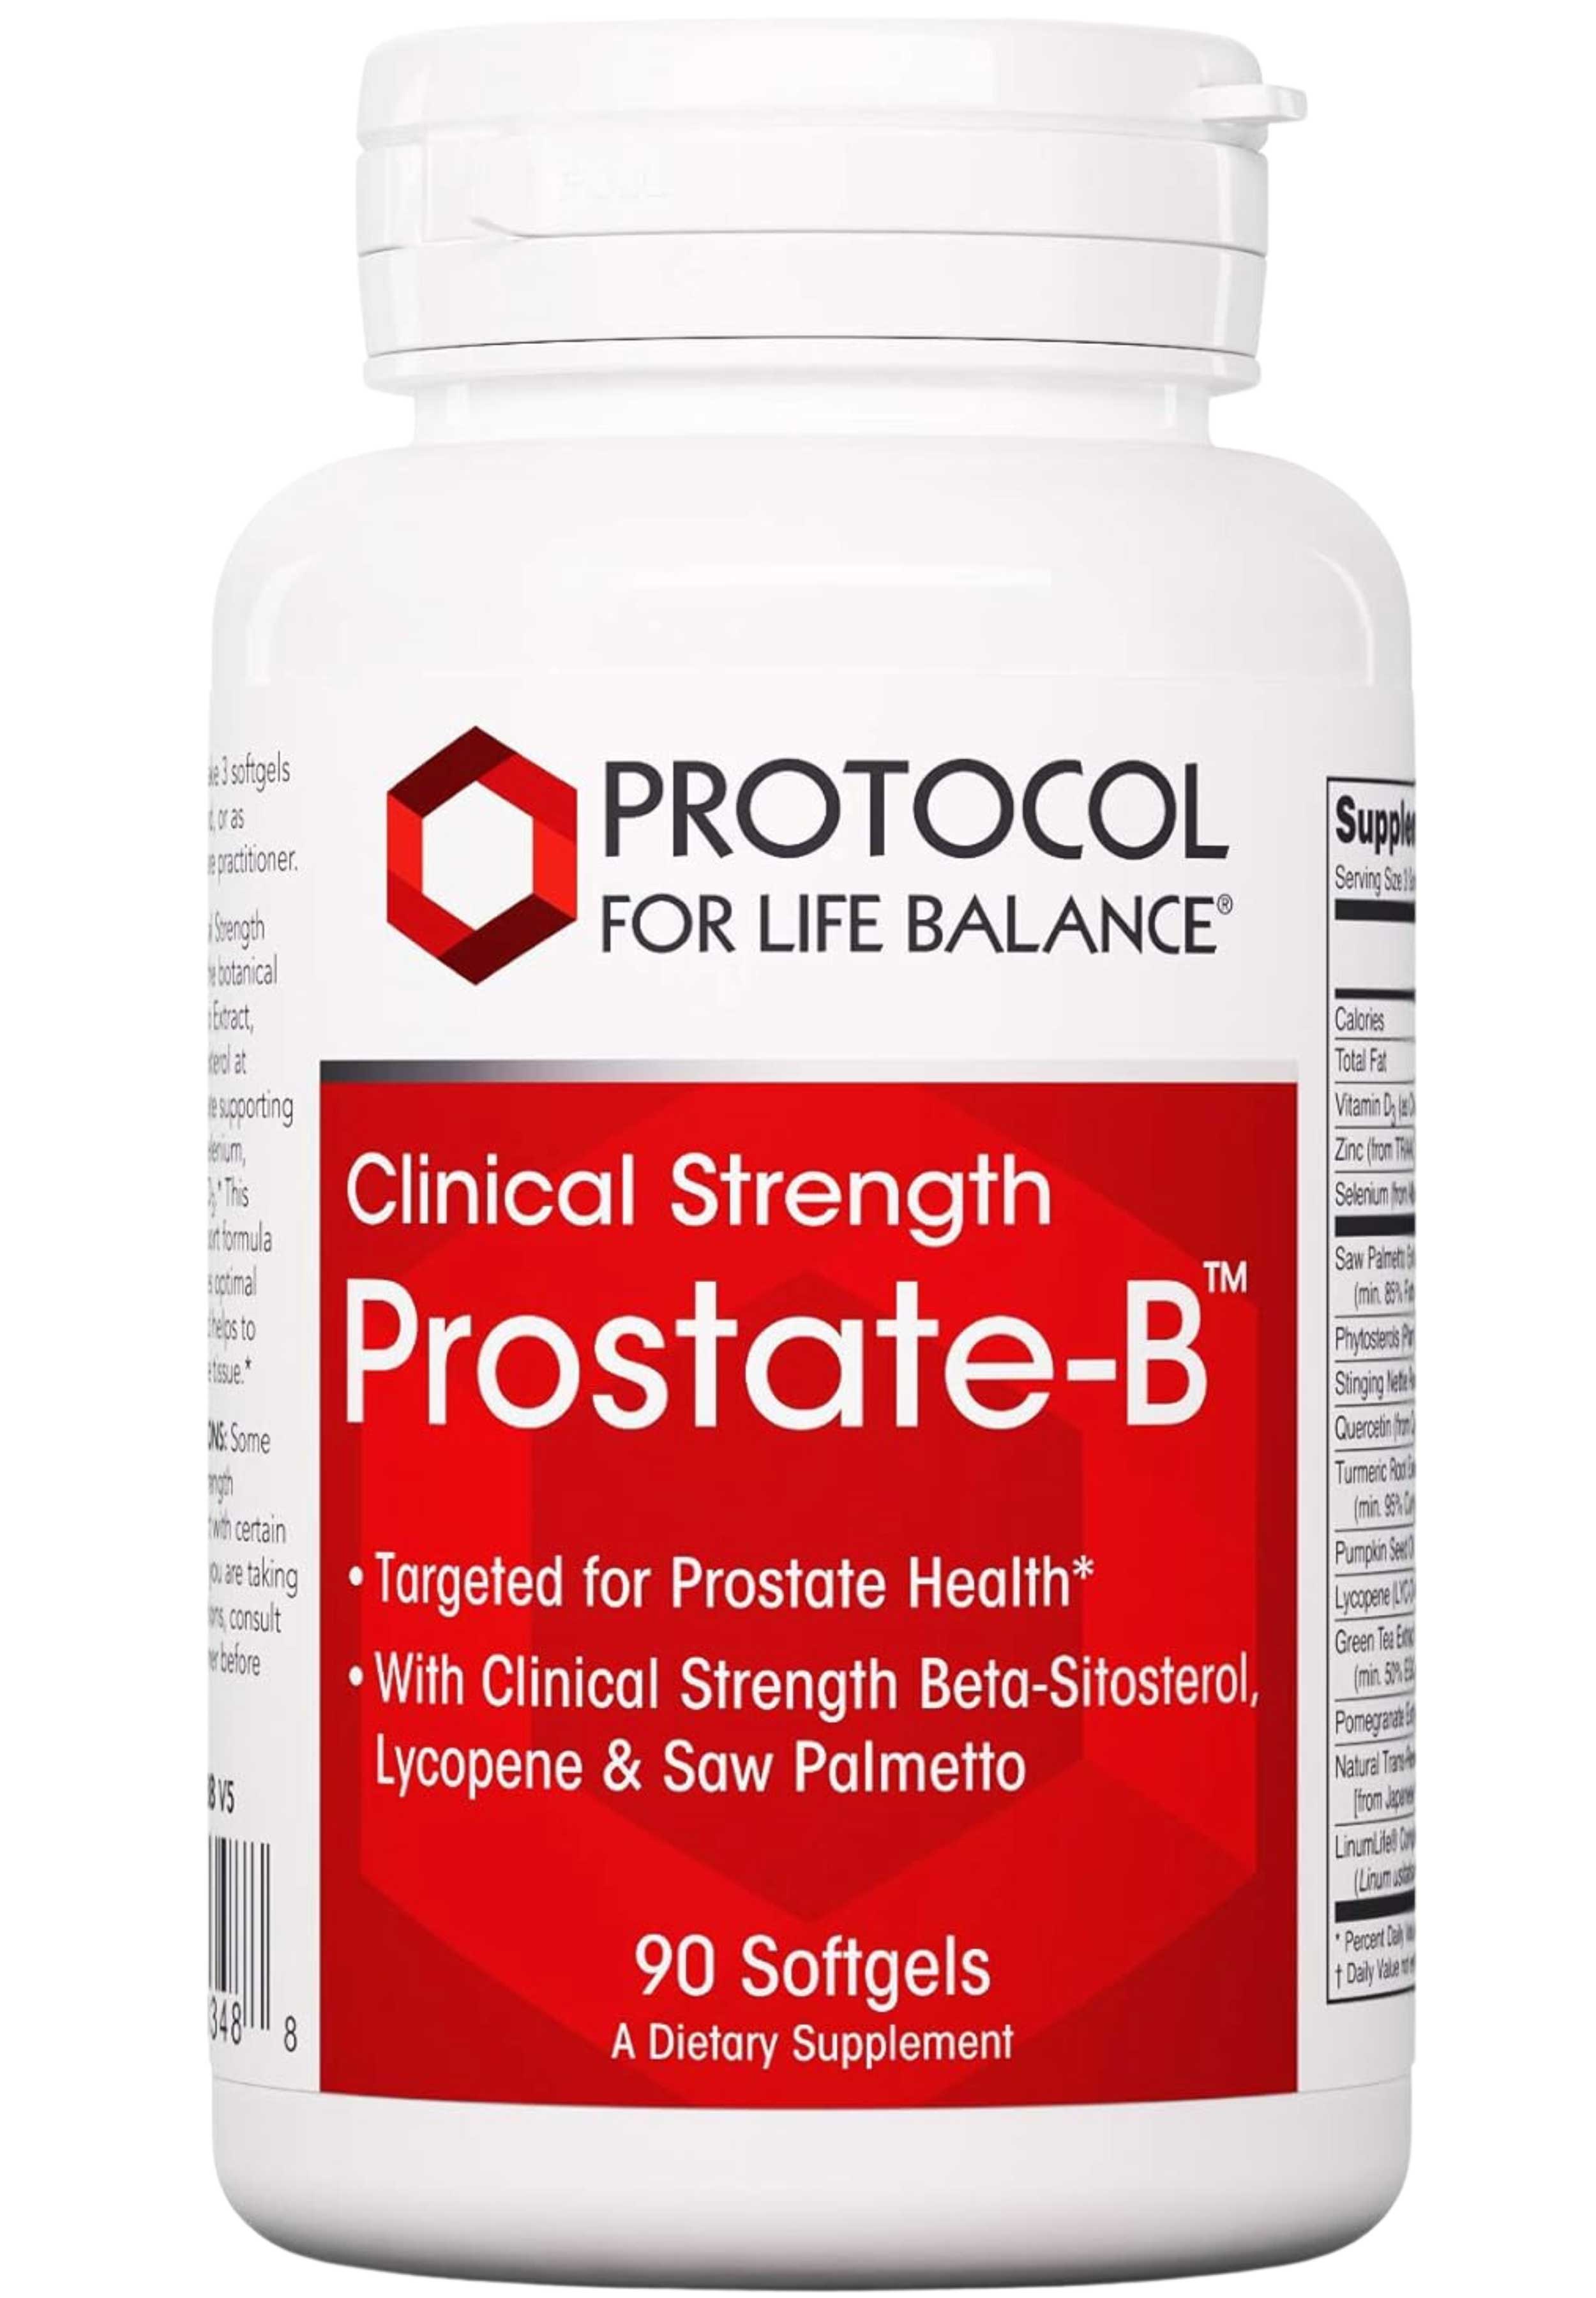 Protocol for Life Balance Prostate-B